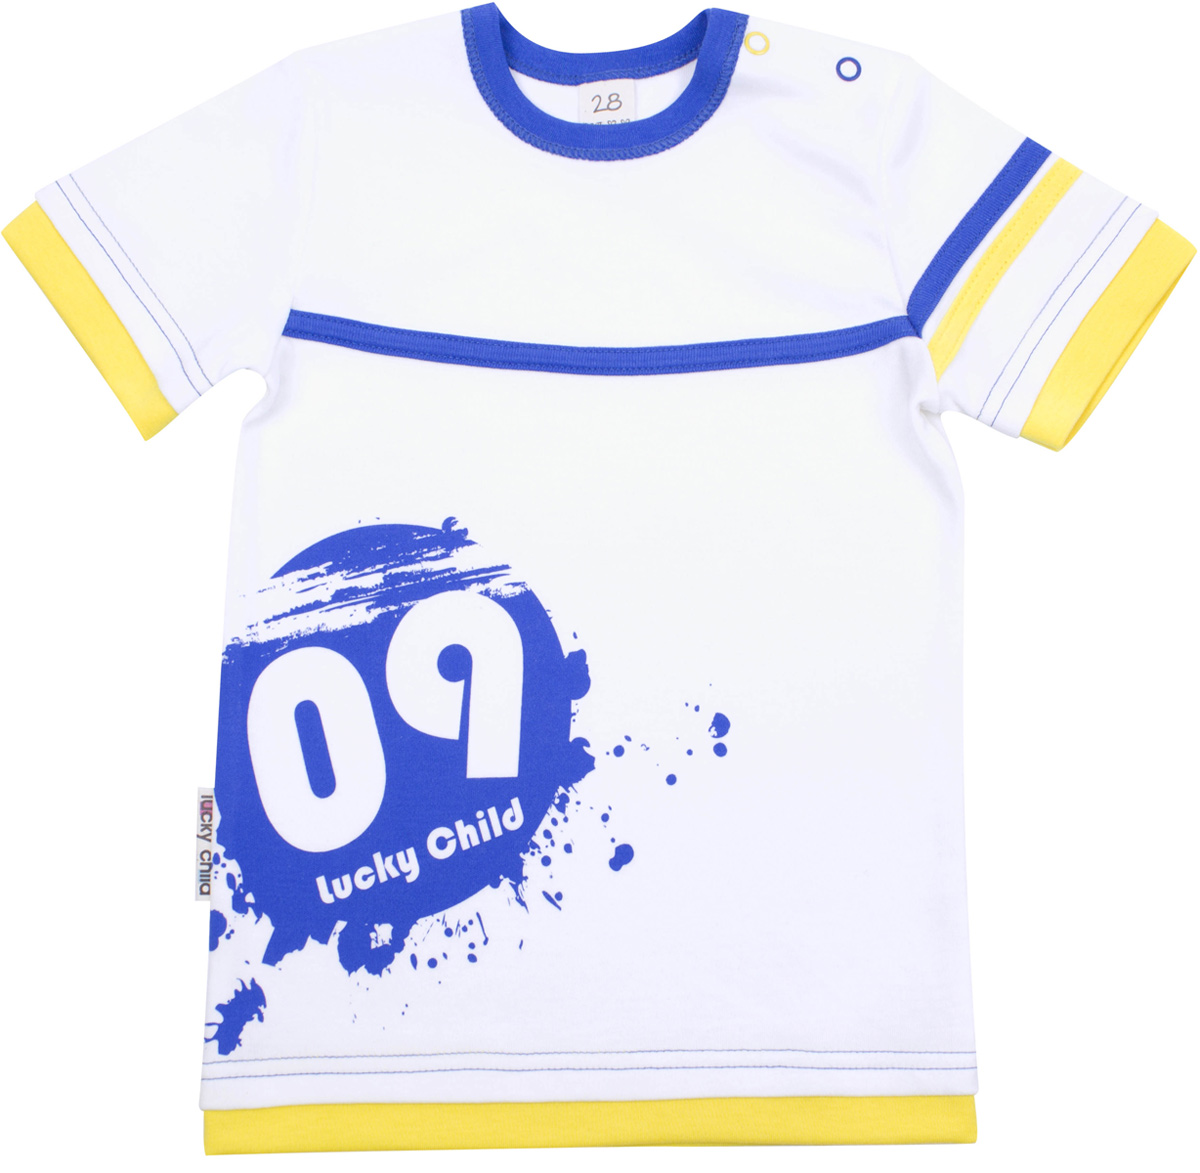 Футболка для мальчика Lucky Child Летний марафон, цвет: белый, голубой. 19-261. Размер 80/86